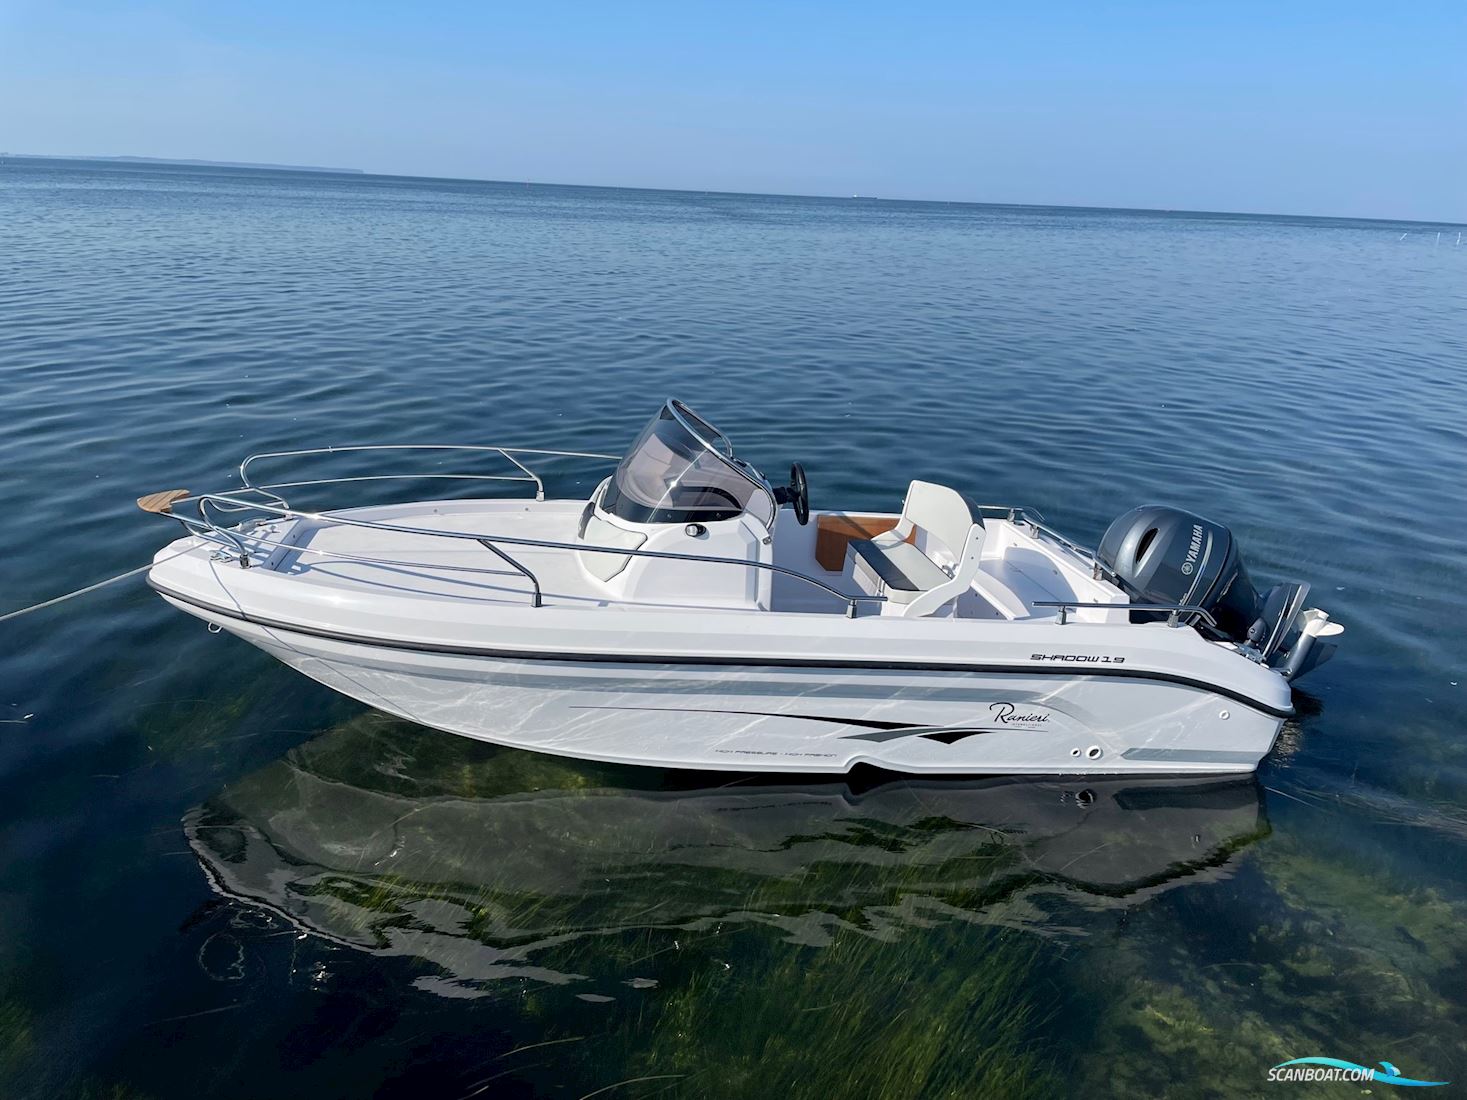 Ranieri Shadow 19 Motor boat 2019, with Yamaha F100 engine, Denmark